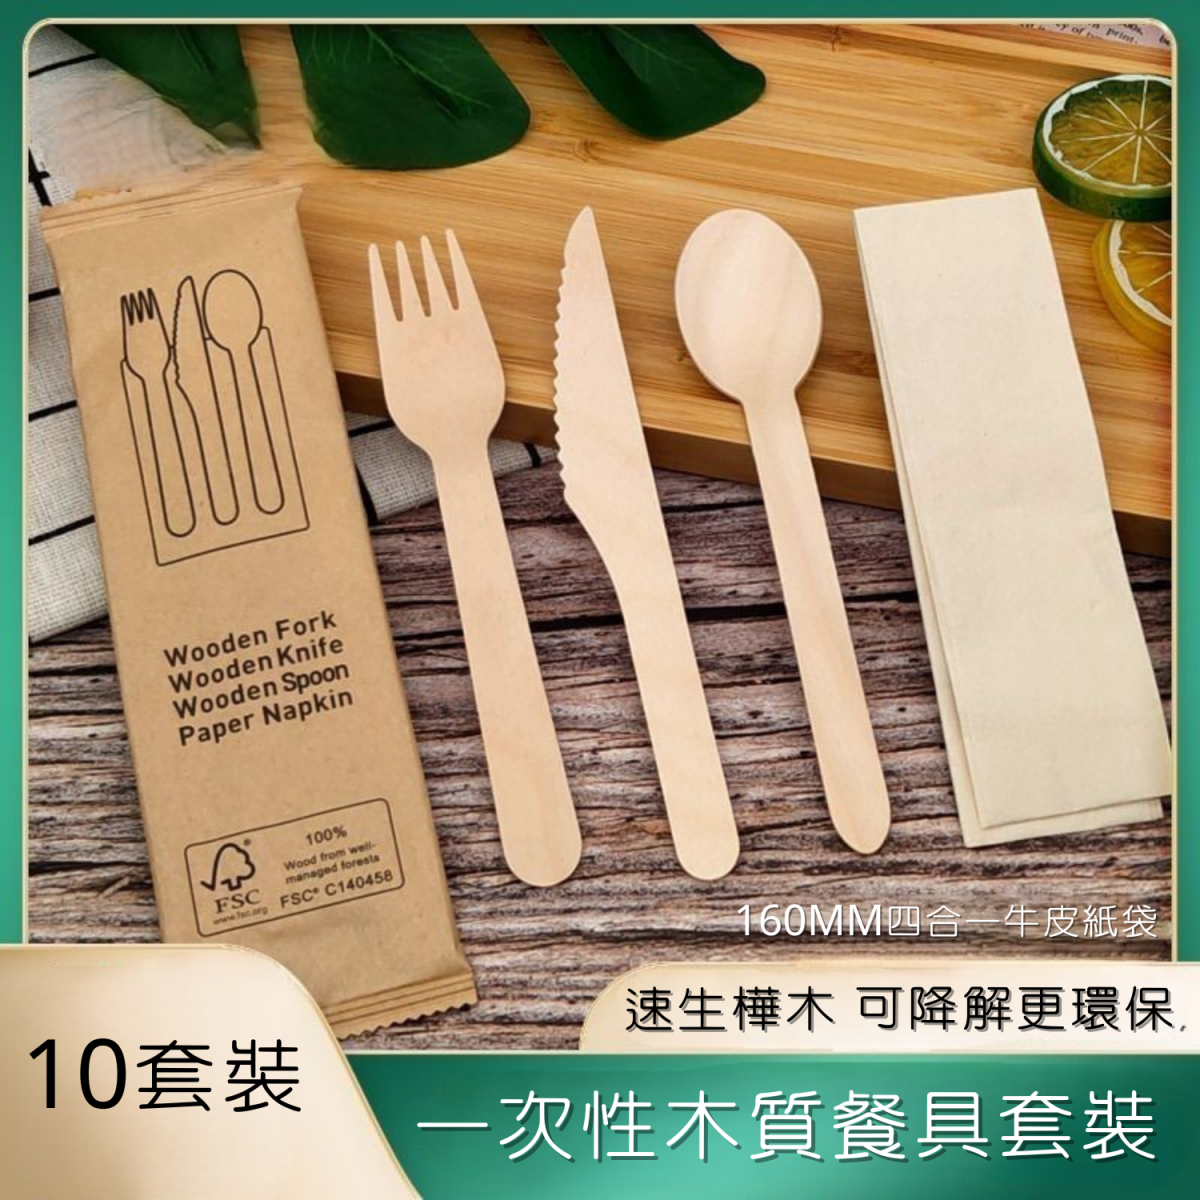 Disposable biodegradable birch wooden tableware set (10 sets) 160mm